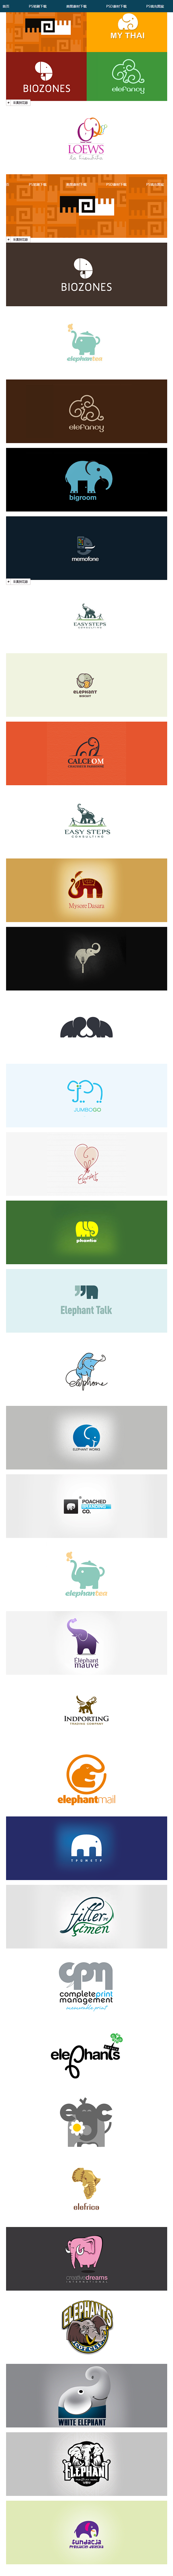 40个小象动物logo标志设计 : PS...